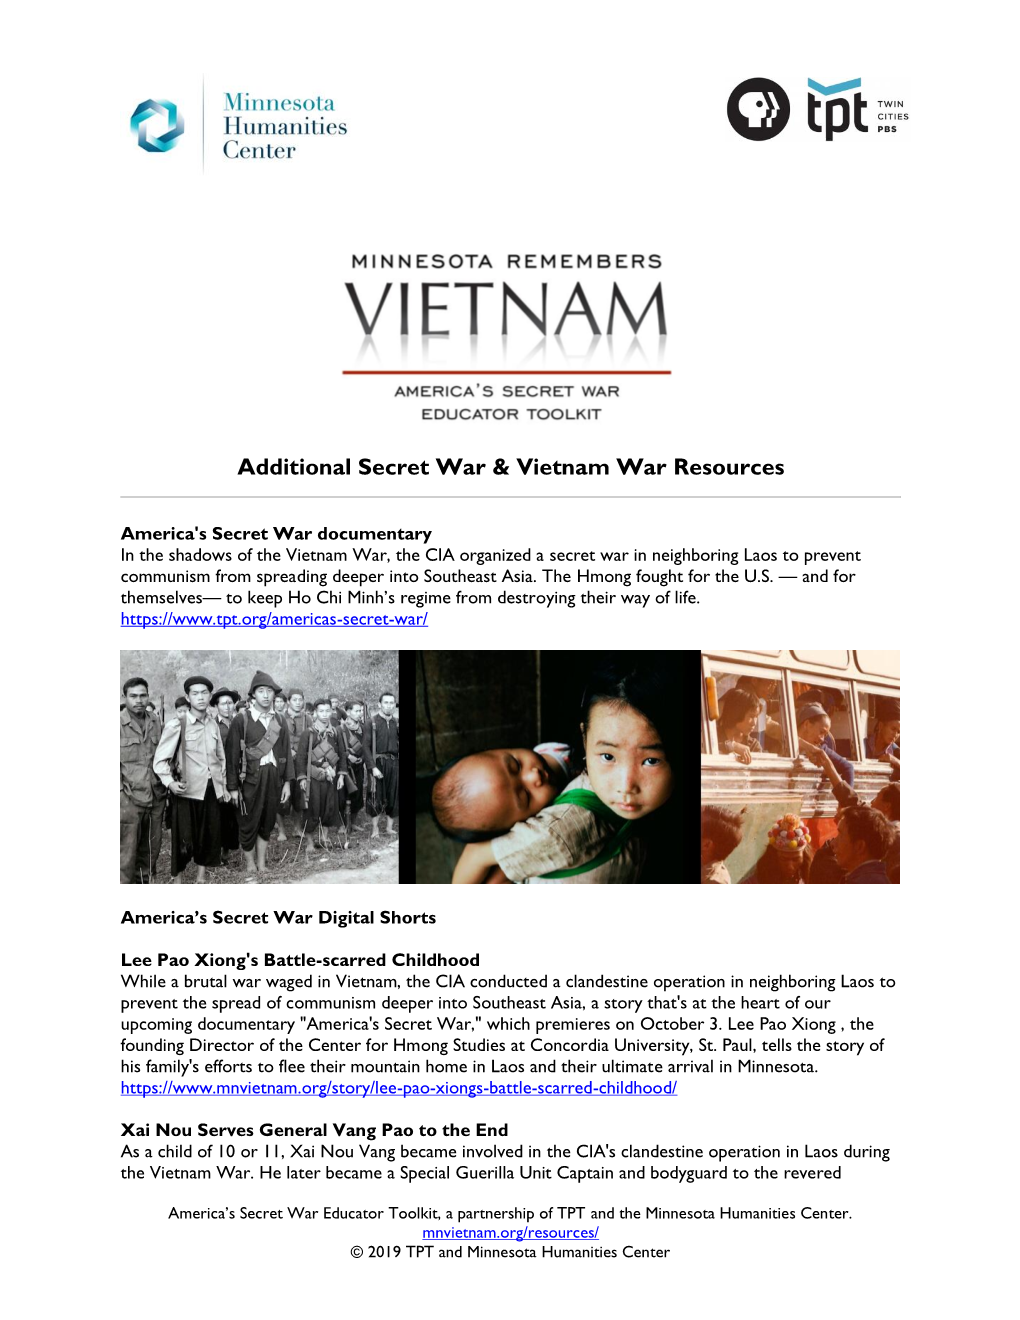 Additional Secret War & Vietnam War Resources